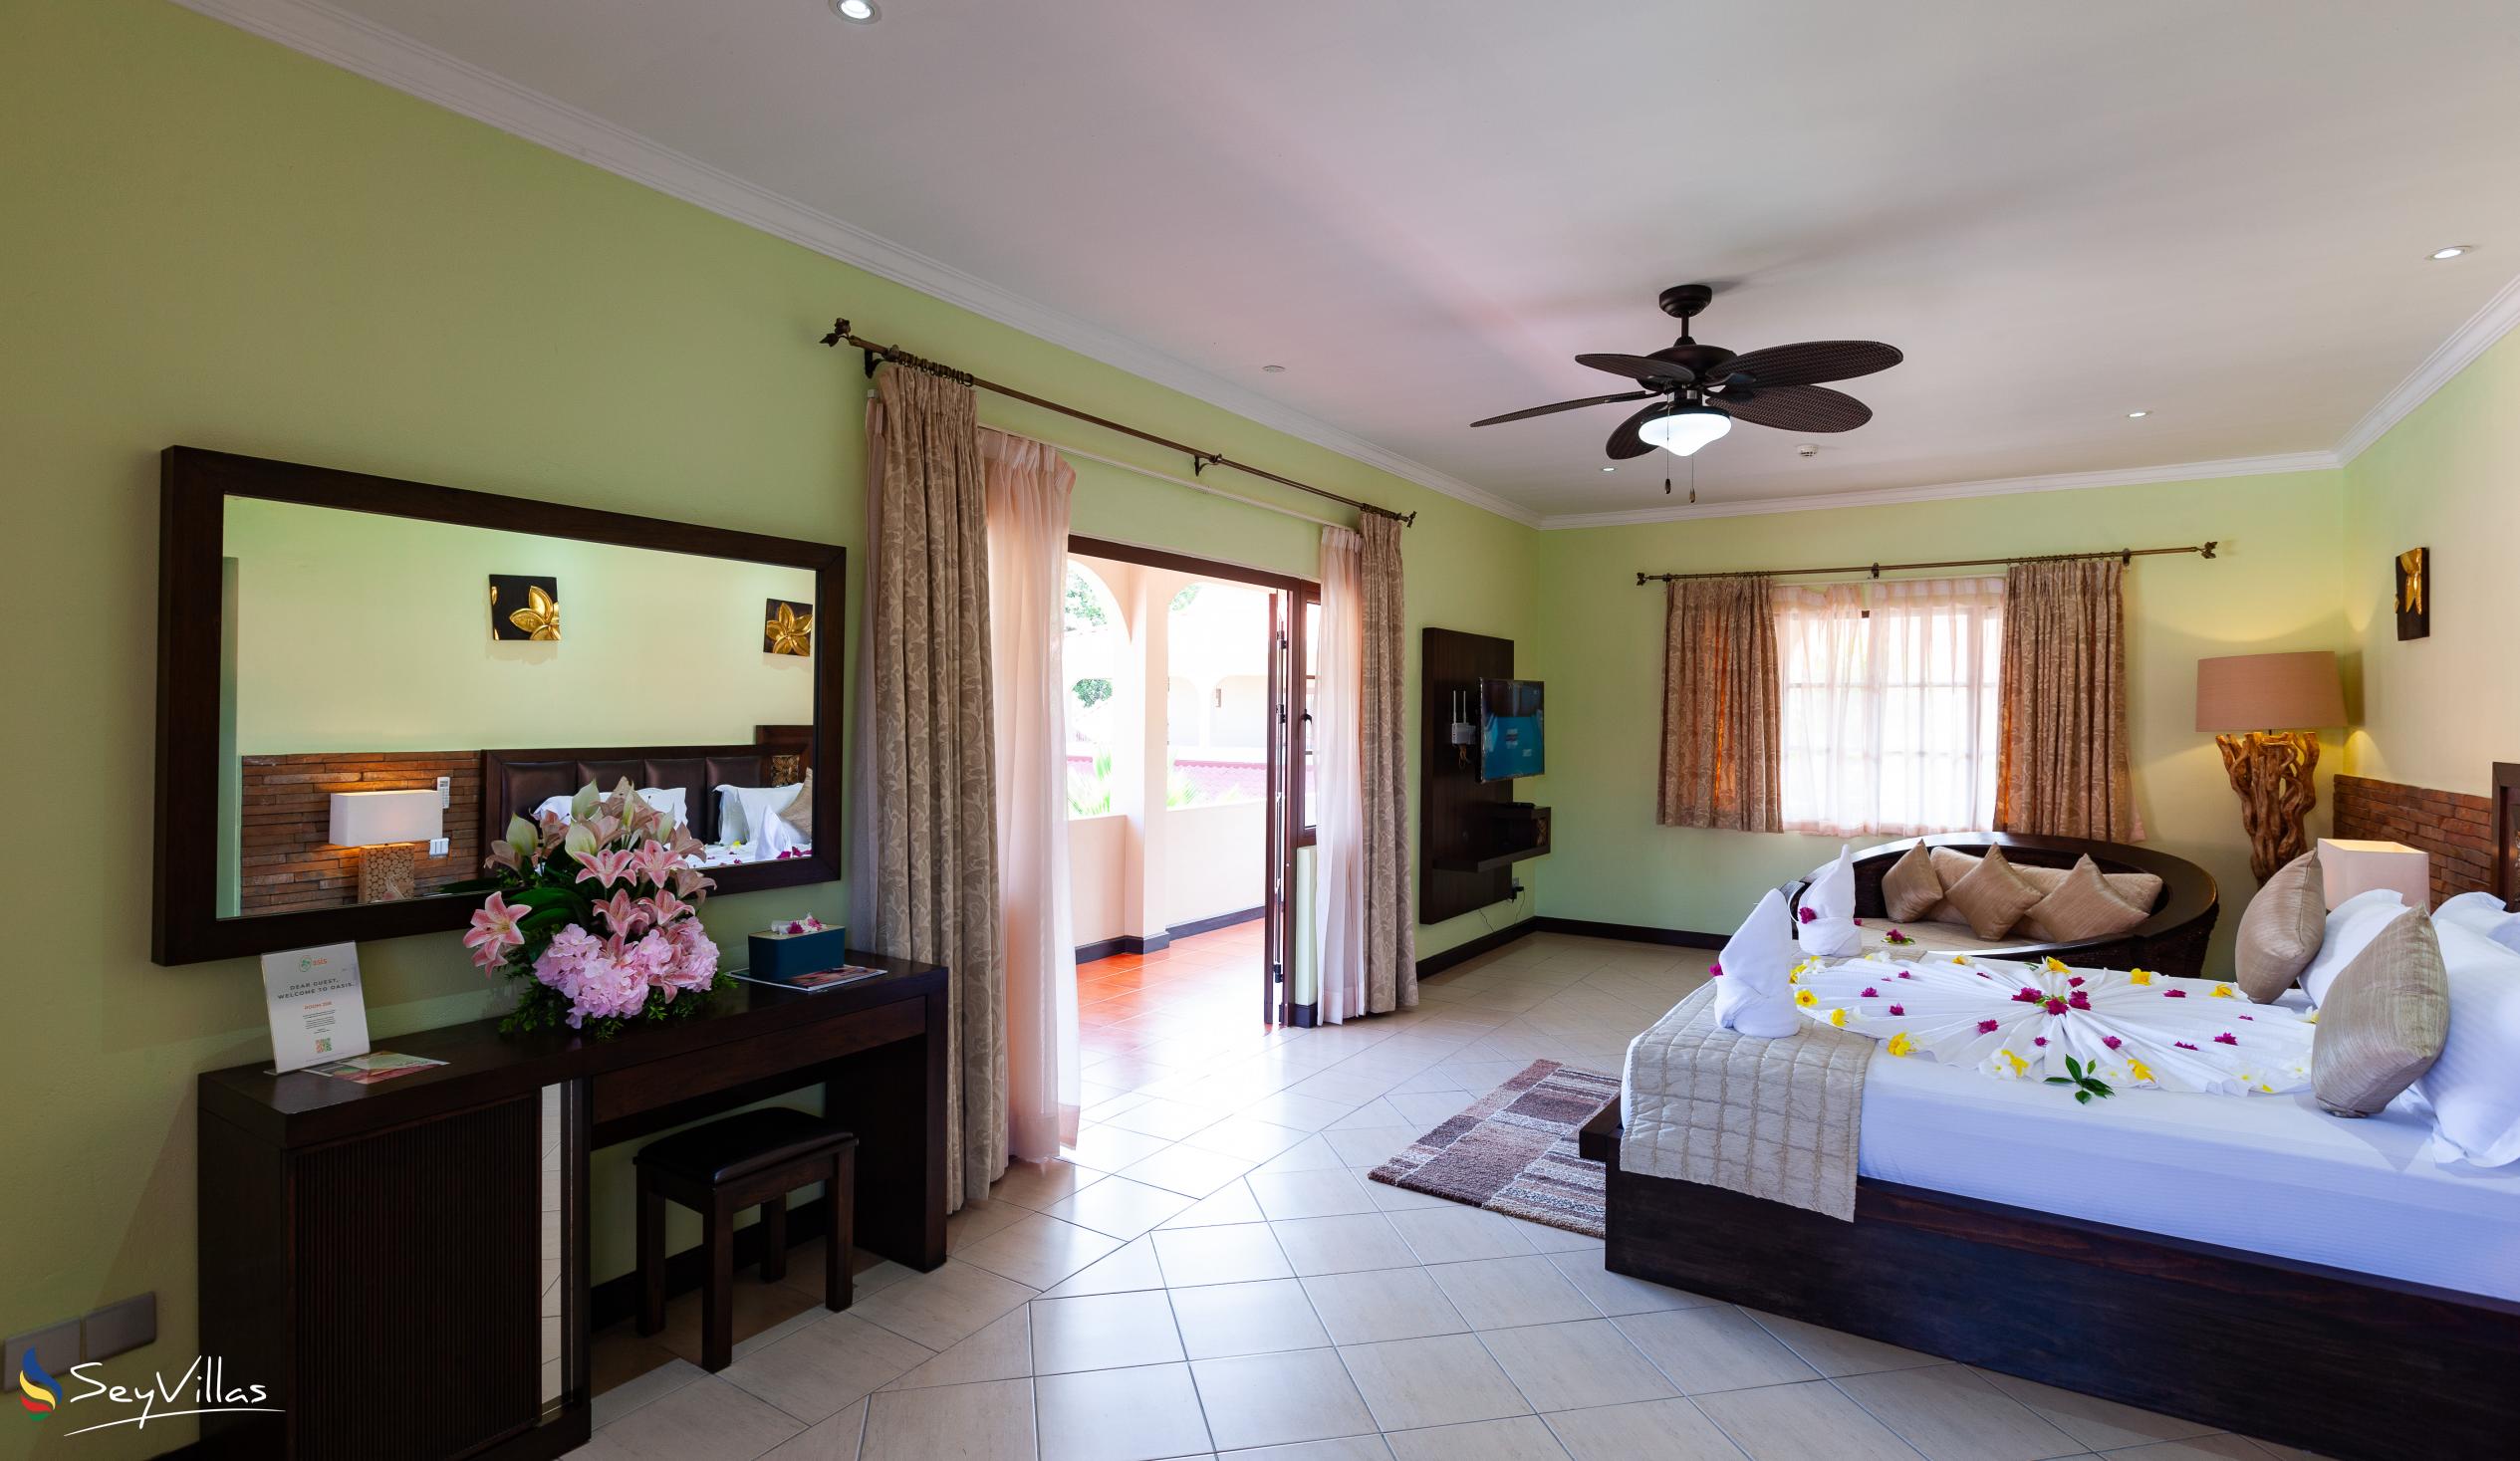 Foto 57: Oasis Hotel, Restaurant & Spa - Chambre Deluxe - Praslin (Seychelles)